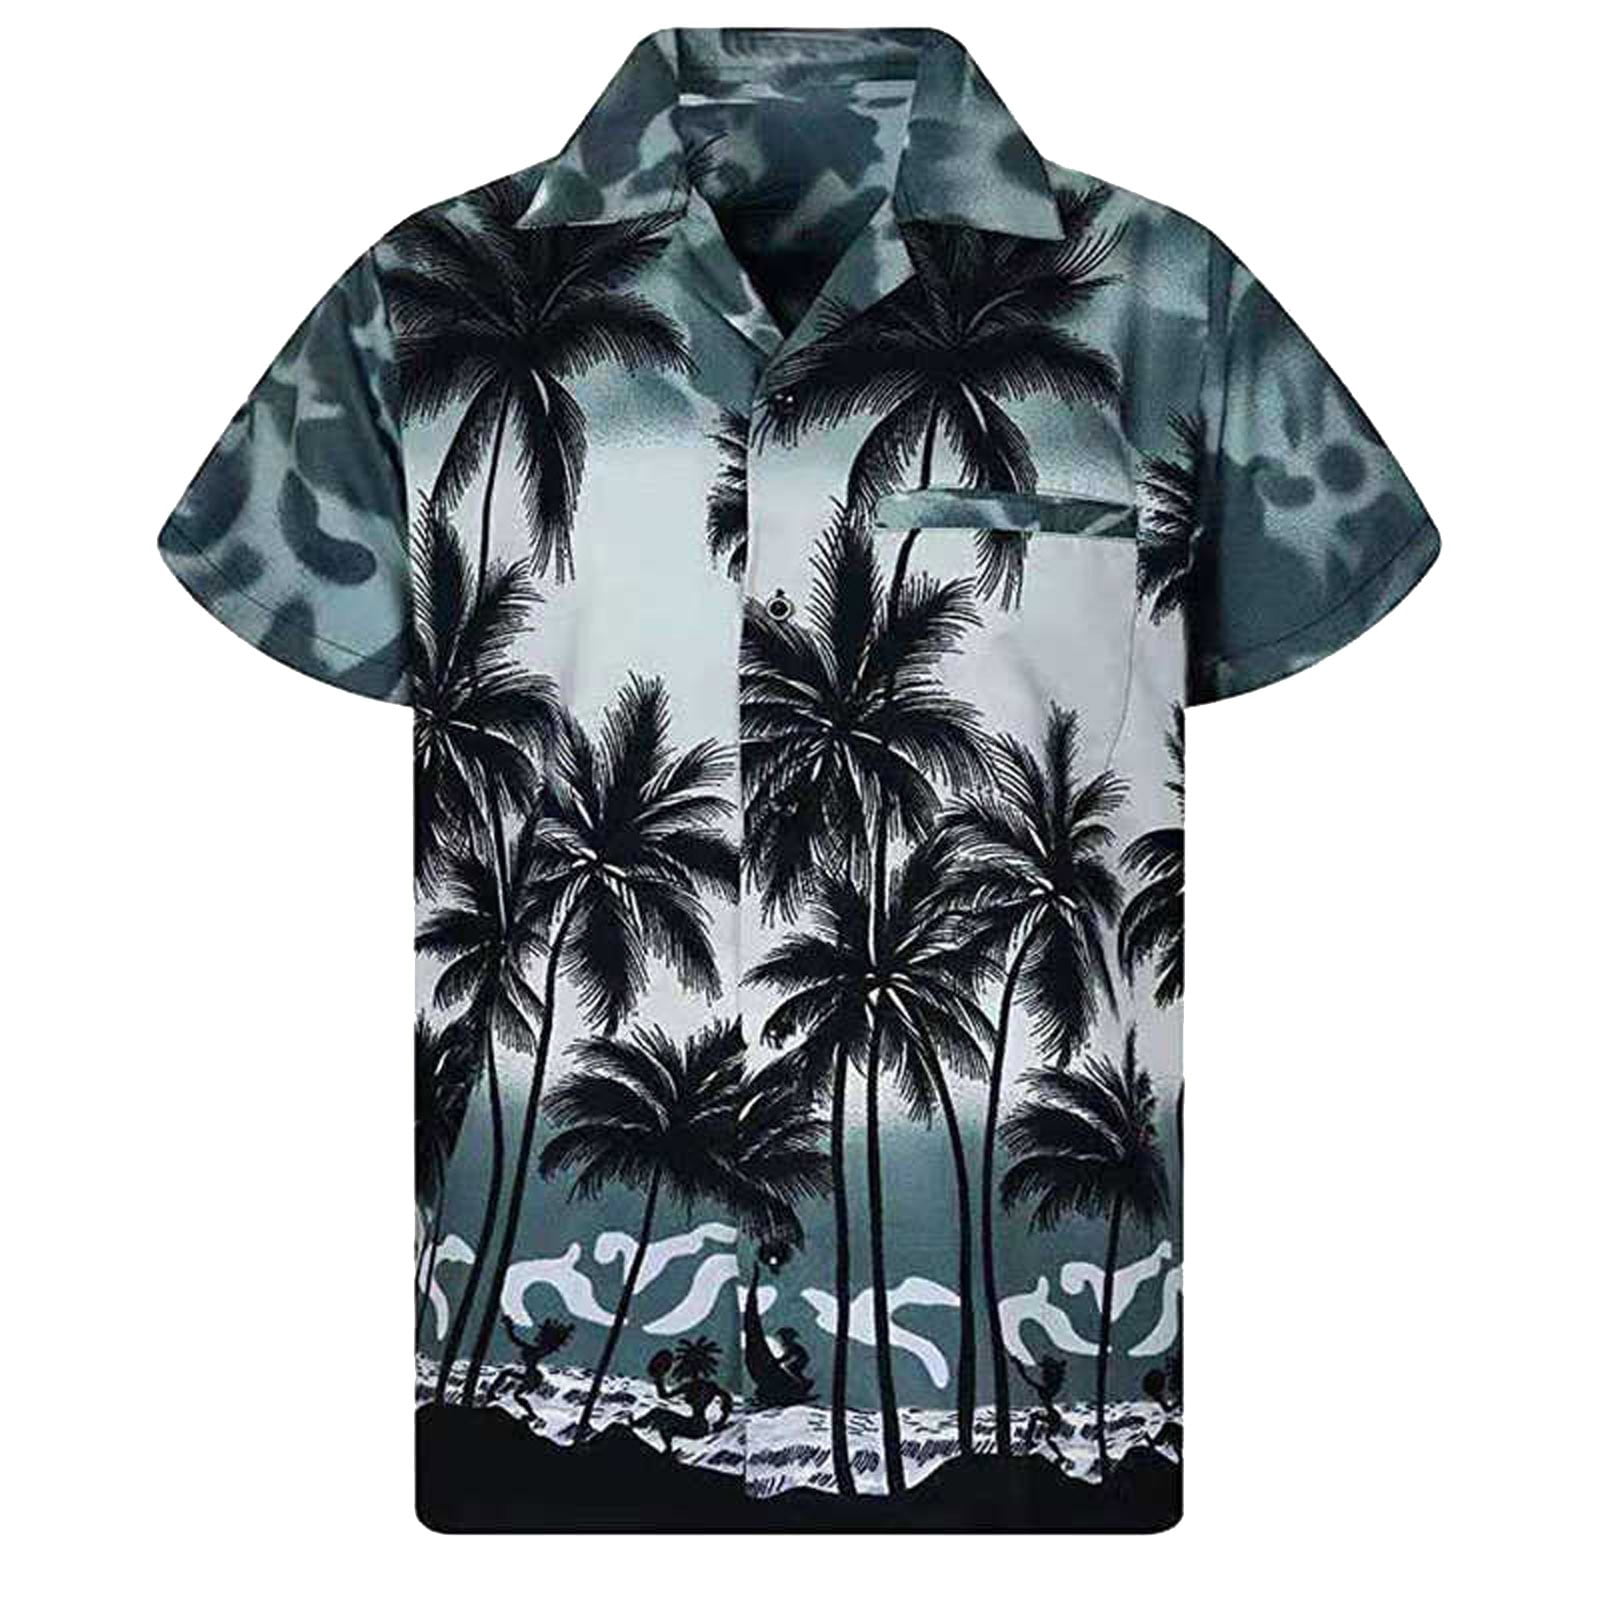 Made in Hawaii Men's Hawaiian Shirt Aloha Shirt Off-White with Matching Front Parrots